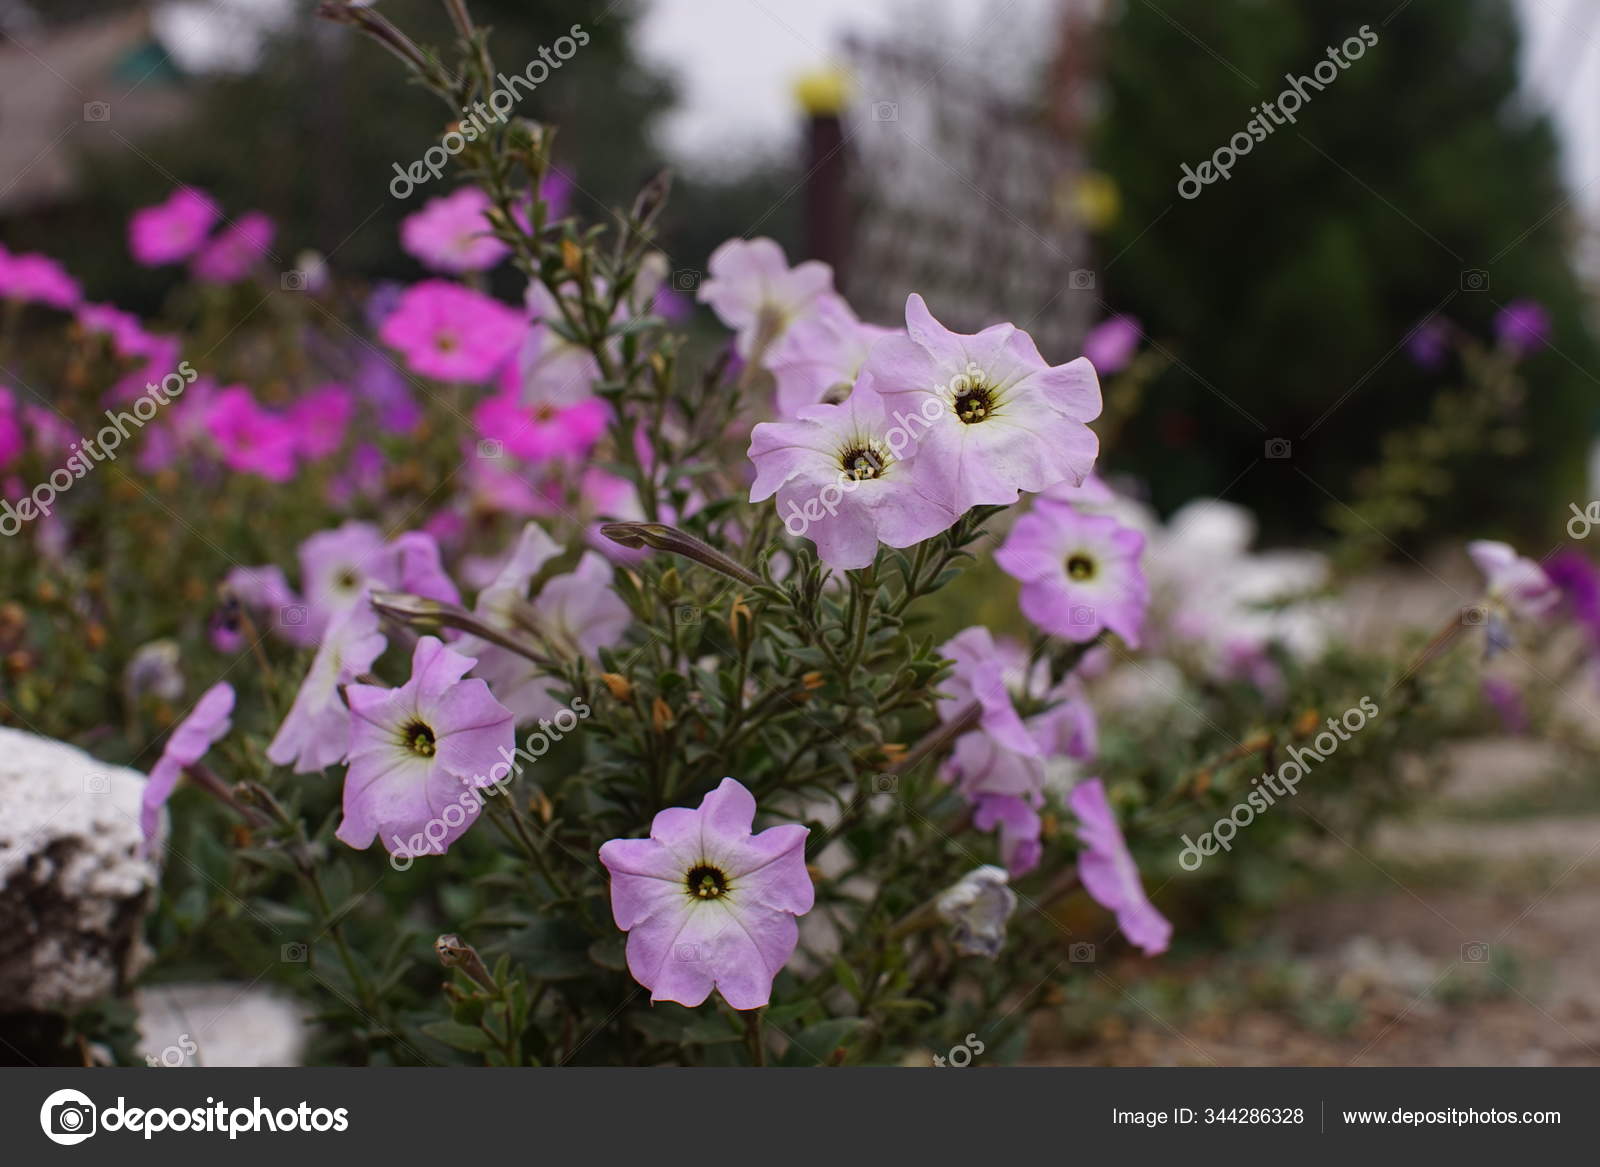 Tender Violet Petunia Flowers Bush Grow In The Garden Stock Photo C Sonymoon 344286328